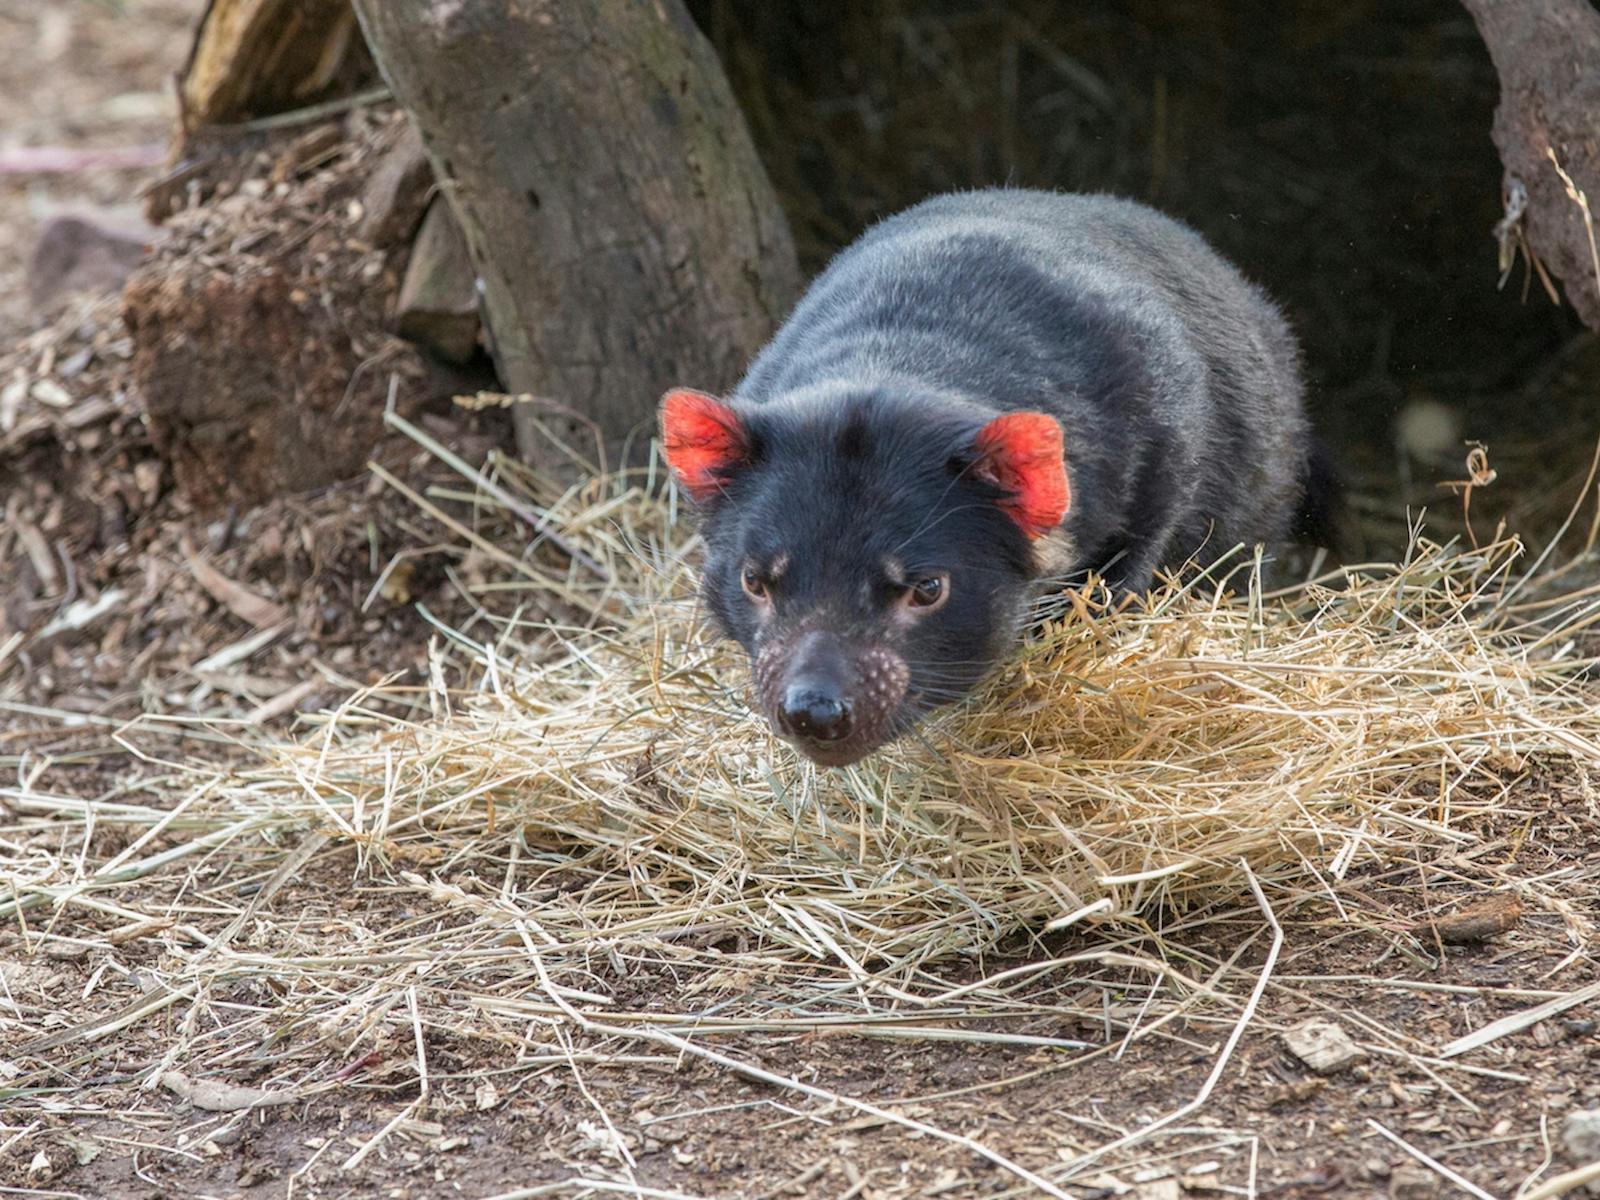 A Tasmanian Devil at Bonorong Wildlife Sanctuary